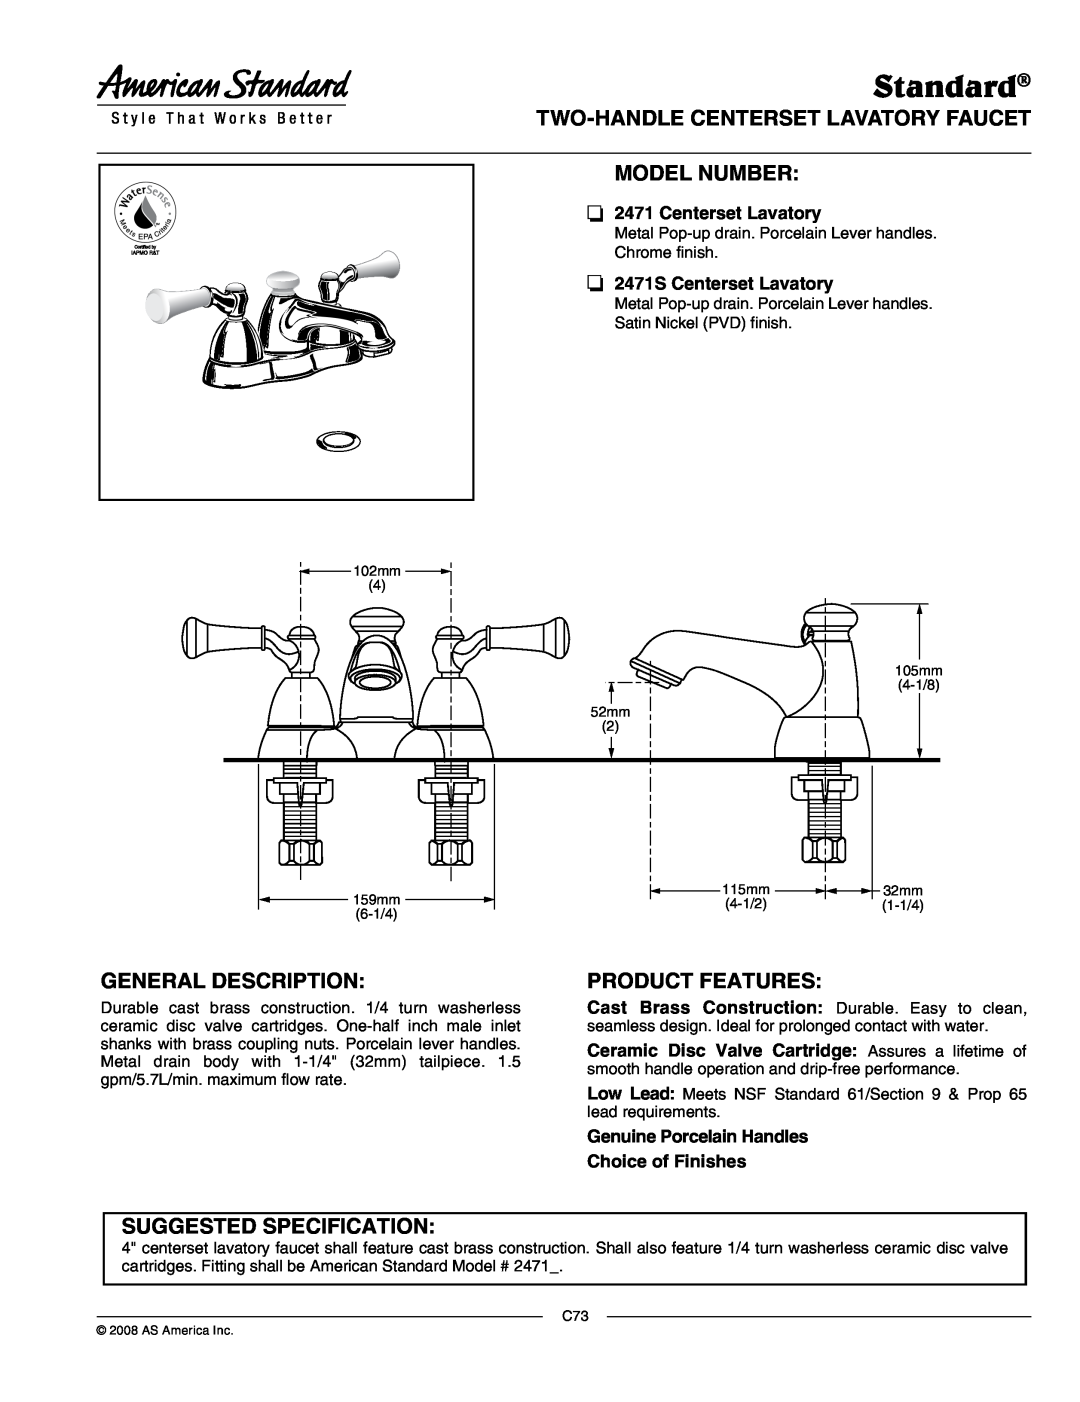 American Standard 2471S manual Standard, Two-Handlecenterset Lavatory Faucet Model Number, General Description 